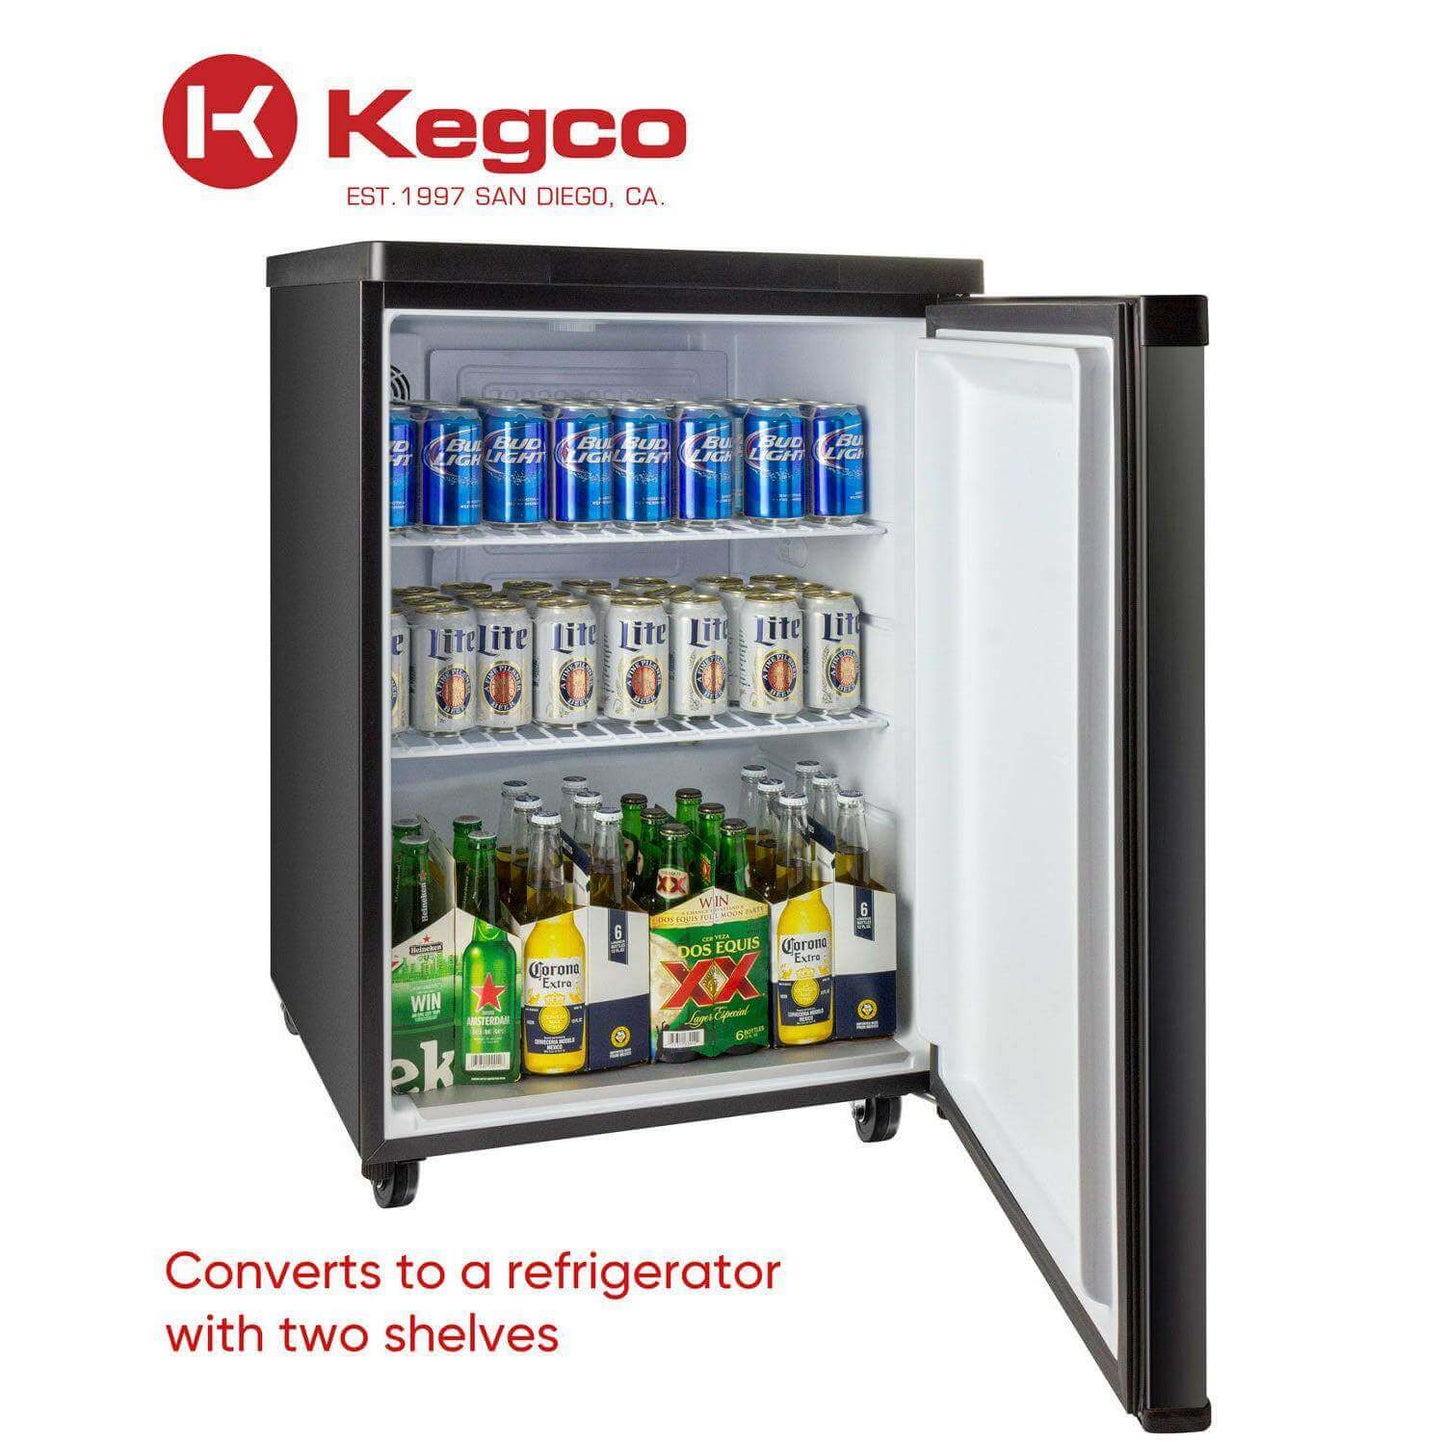 Kegco 24" Wide Single Tap Black Stainless Steel Digital Kegerator